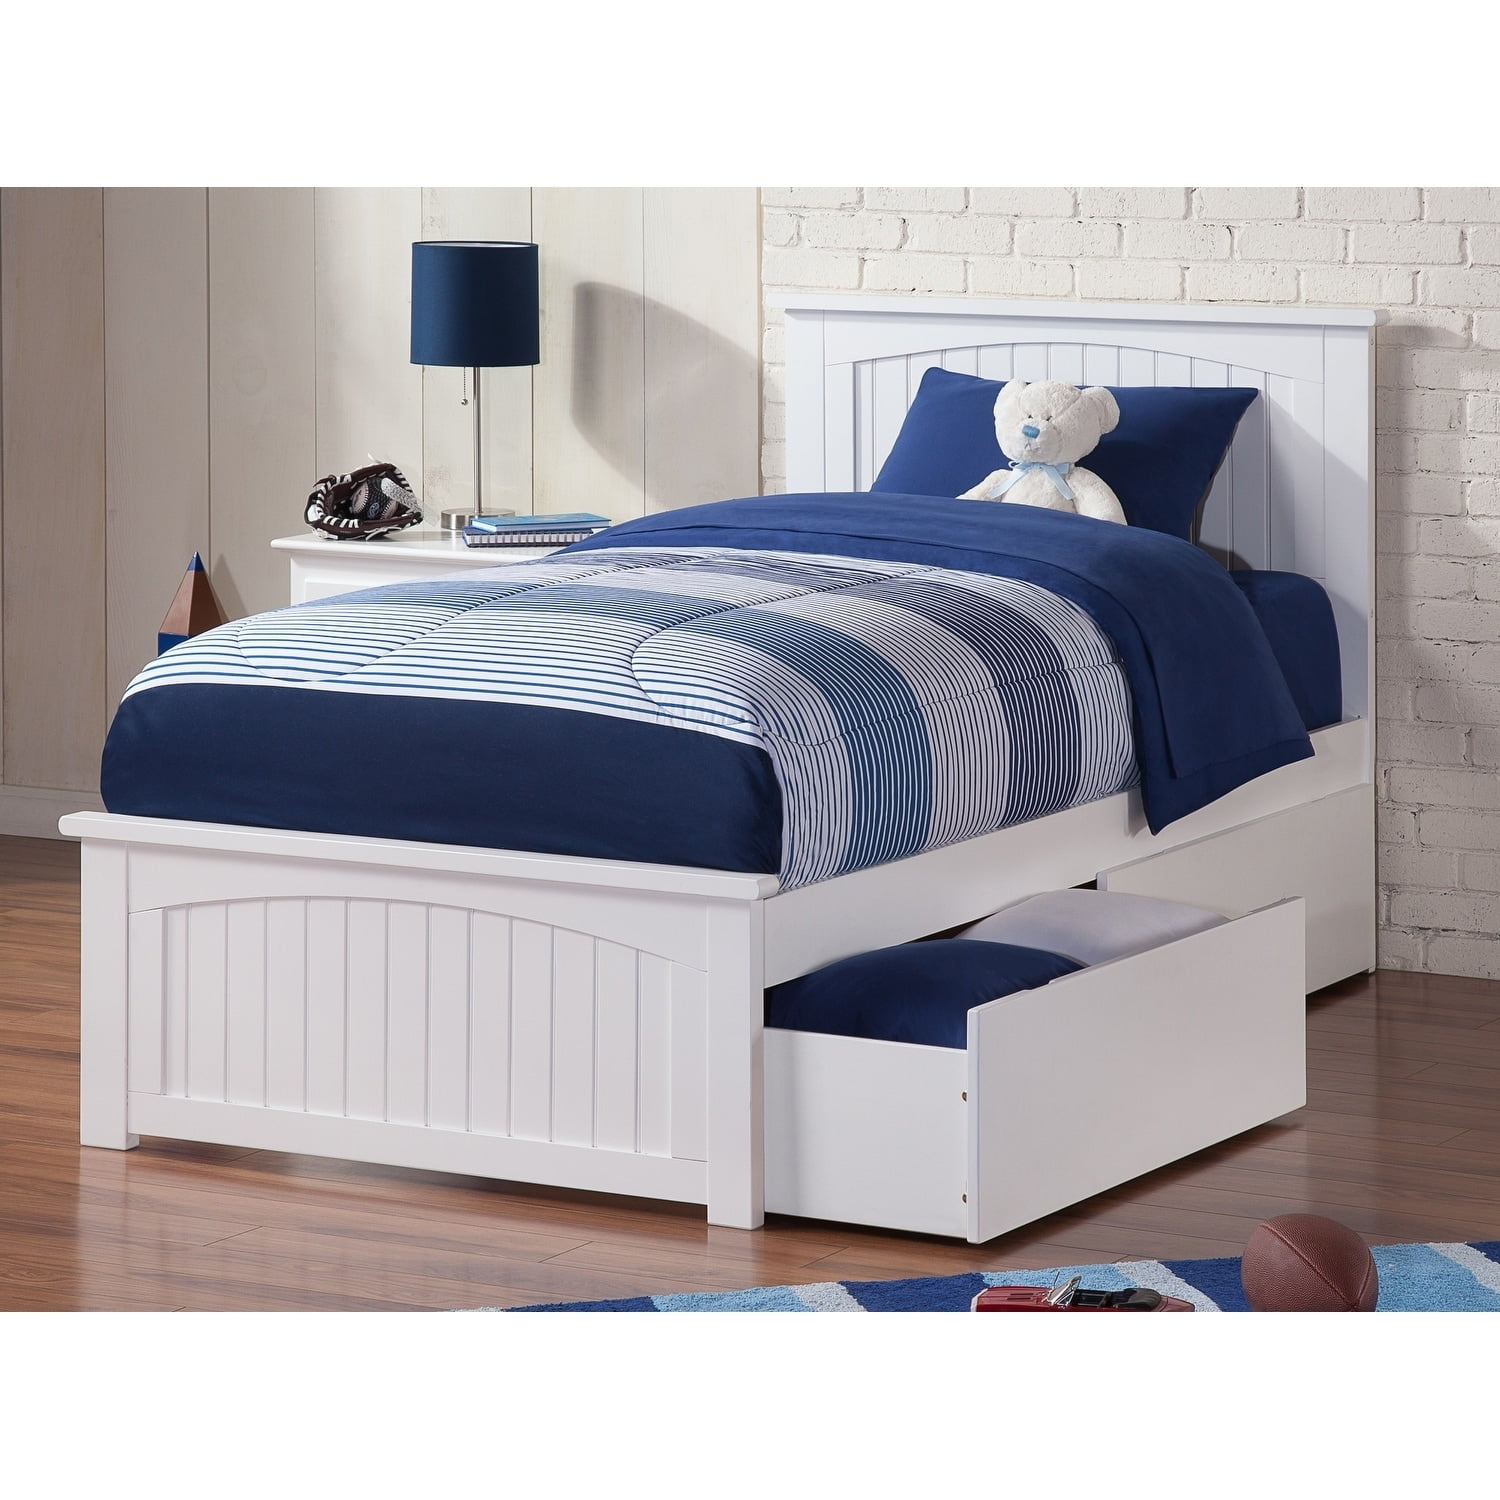 Atlantic Furniture Nantucket Twin Xl Platform Bed With Matching Foot